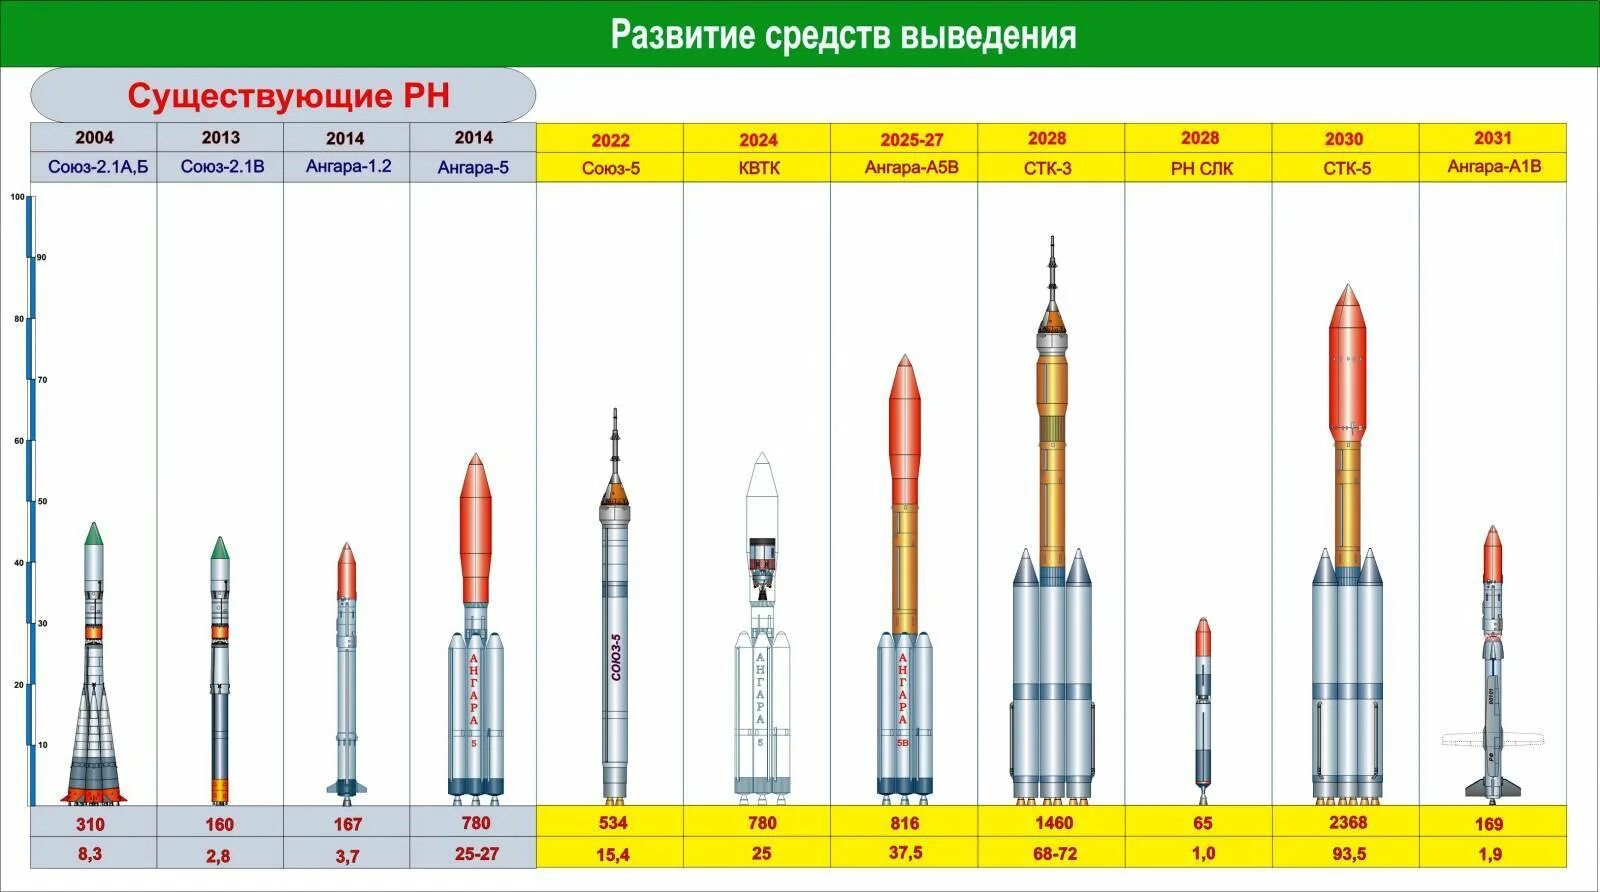 Ракета-носитель Ангара а5 компоновка. Ракета-носитель Союз 2.1 а чертеж. Ангара-1.2 ракета-носитель схема. Ангара 1.1 ракета-носитель.